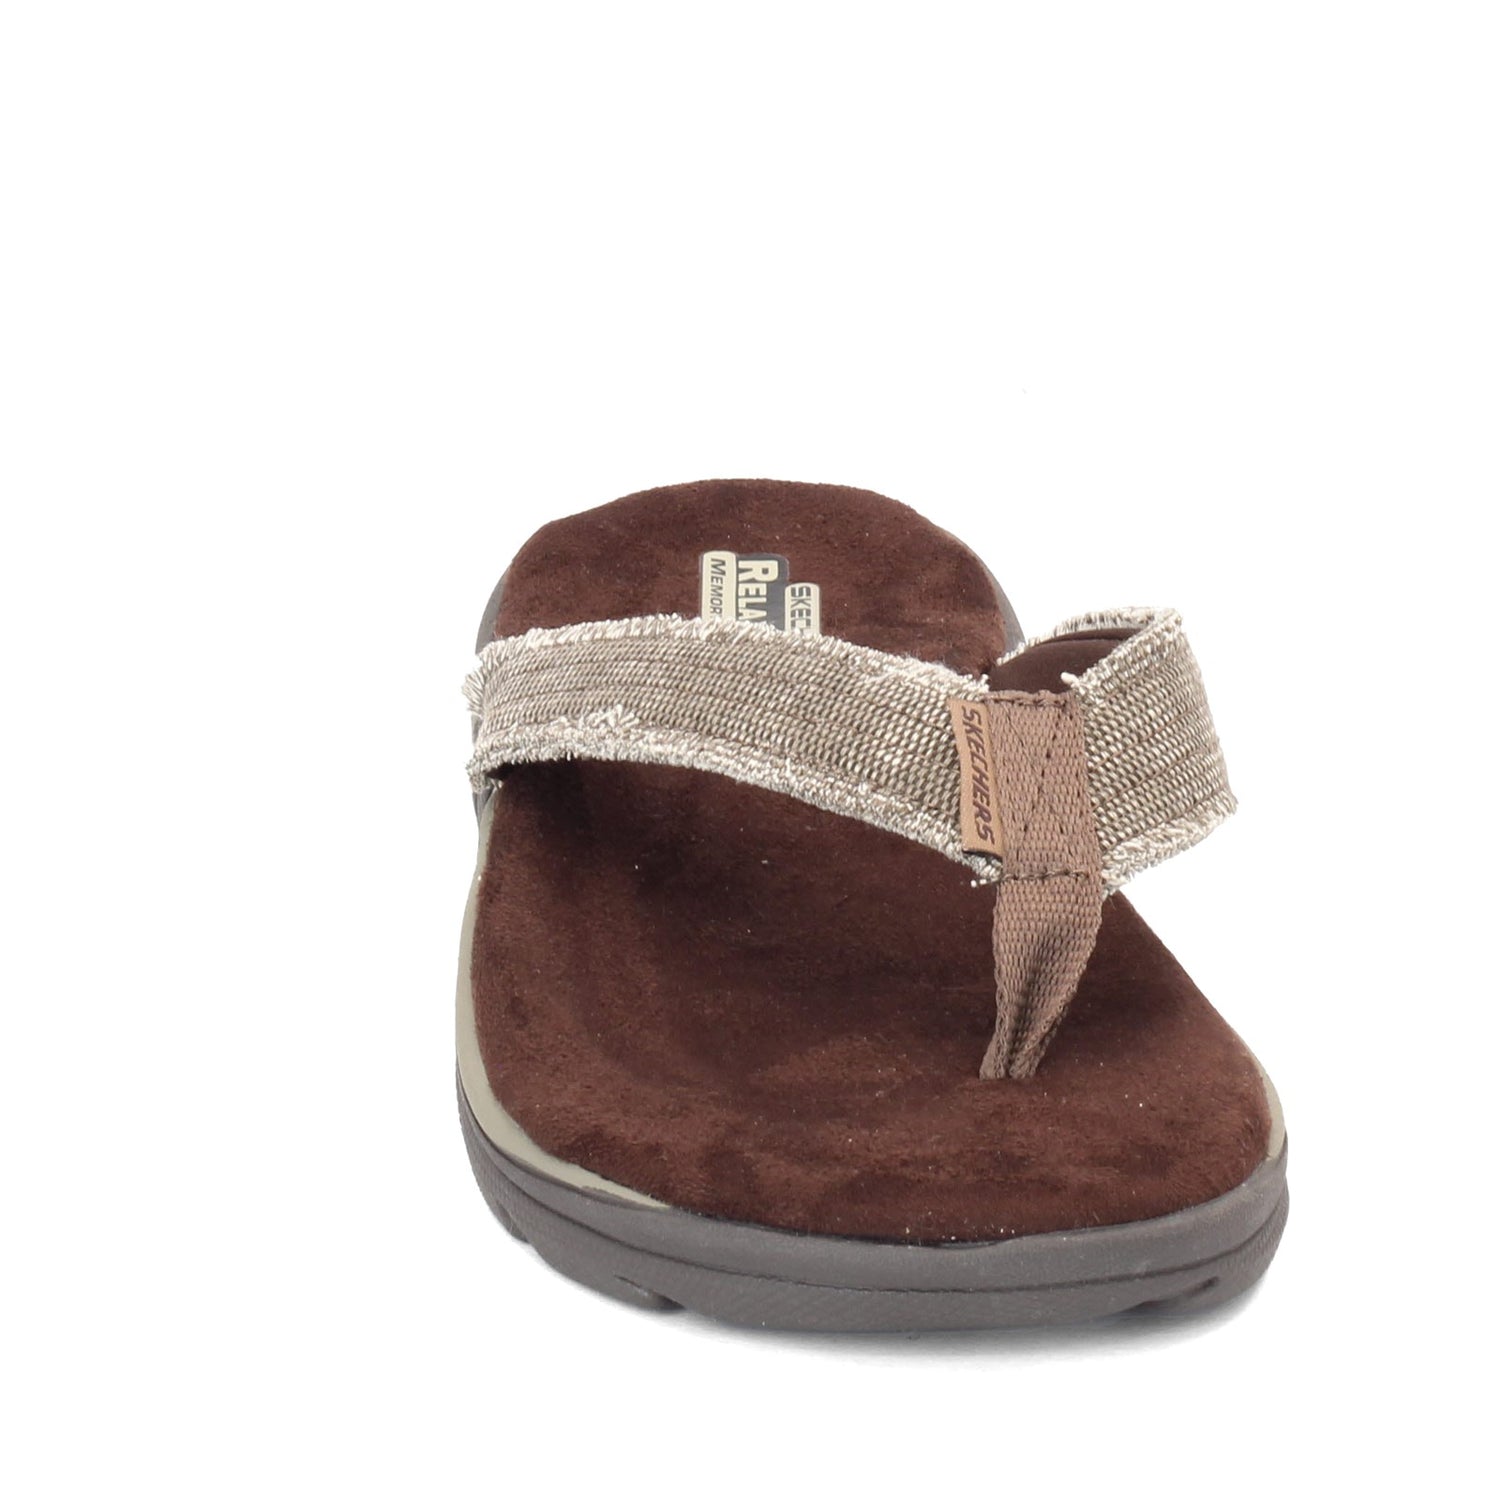 Skechers, Shoes, Skechers Mens Leather Memory Foam Comfort Flip Flop  Sandals 1